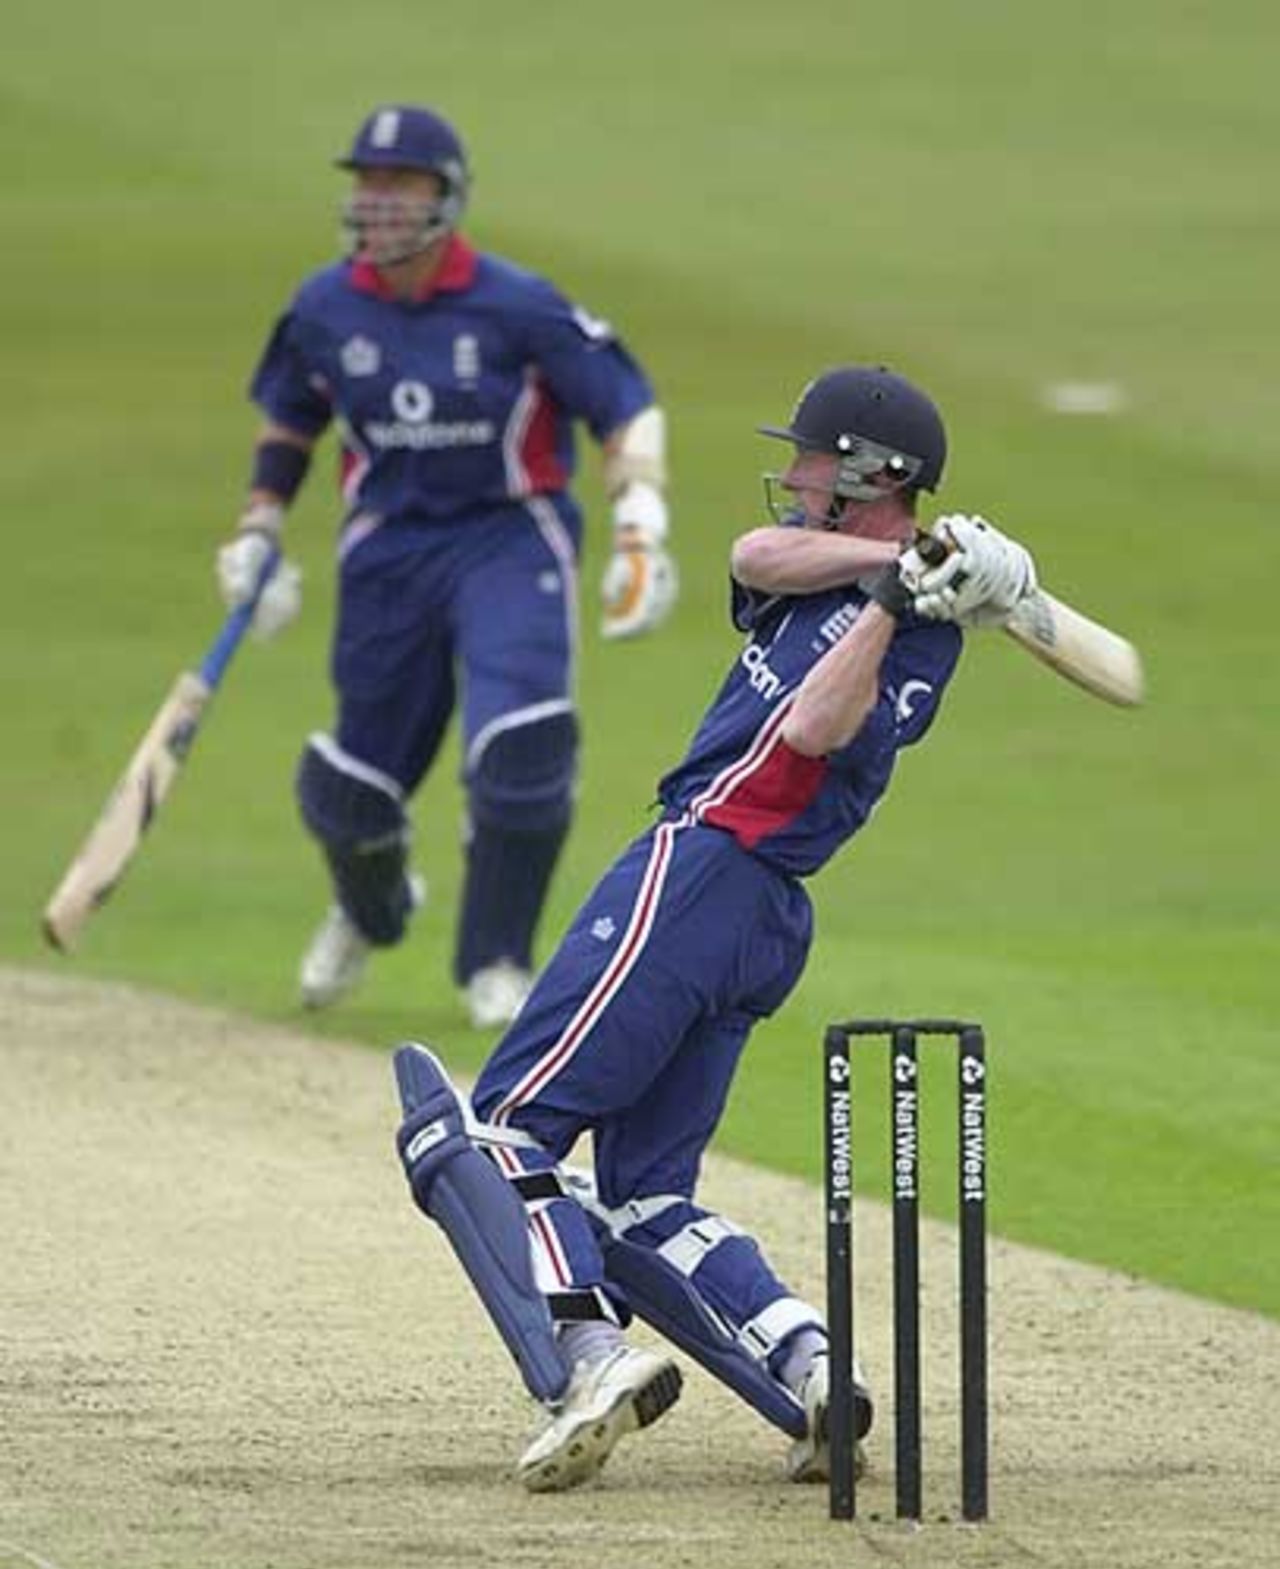 Collingwood smites the Sri Lankan bowling in his partnership with Stewart, England v Sri Lanka at Leeds, July 2002